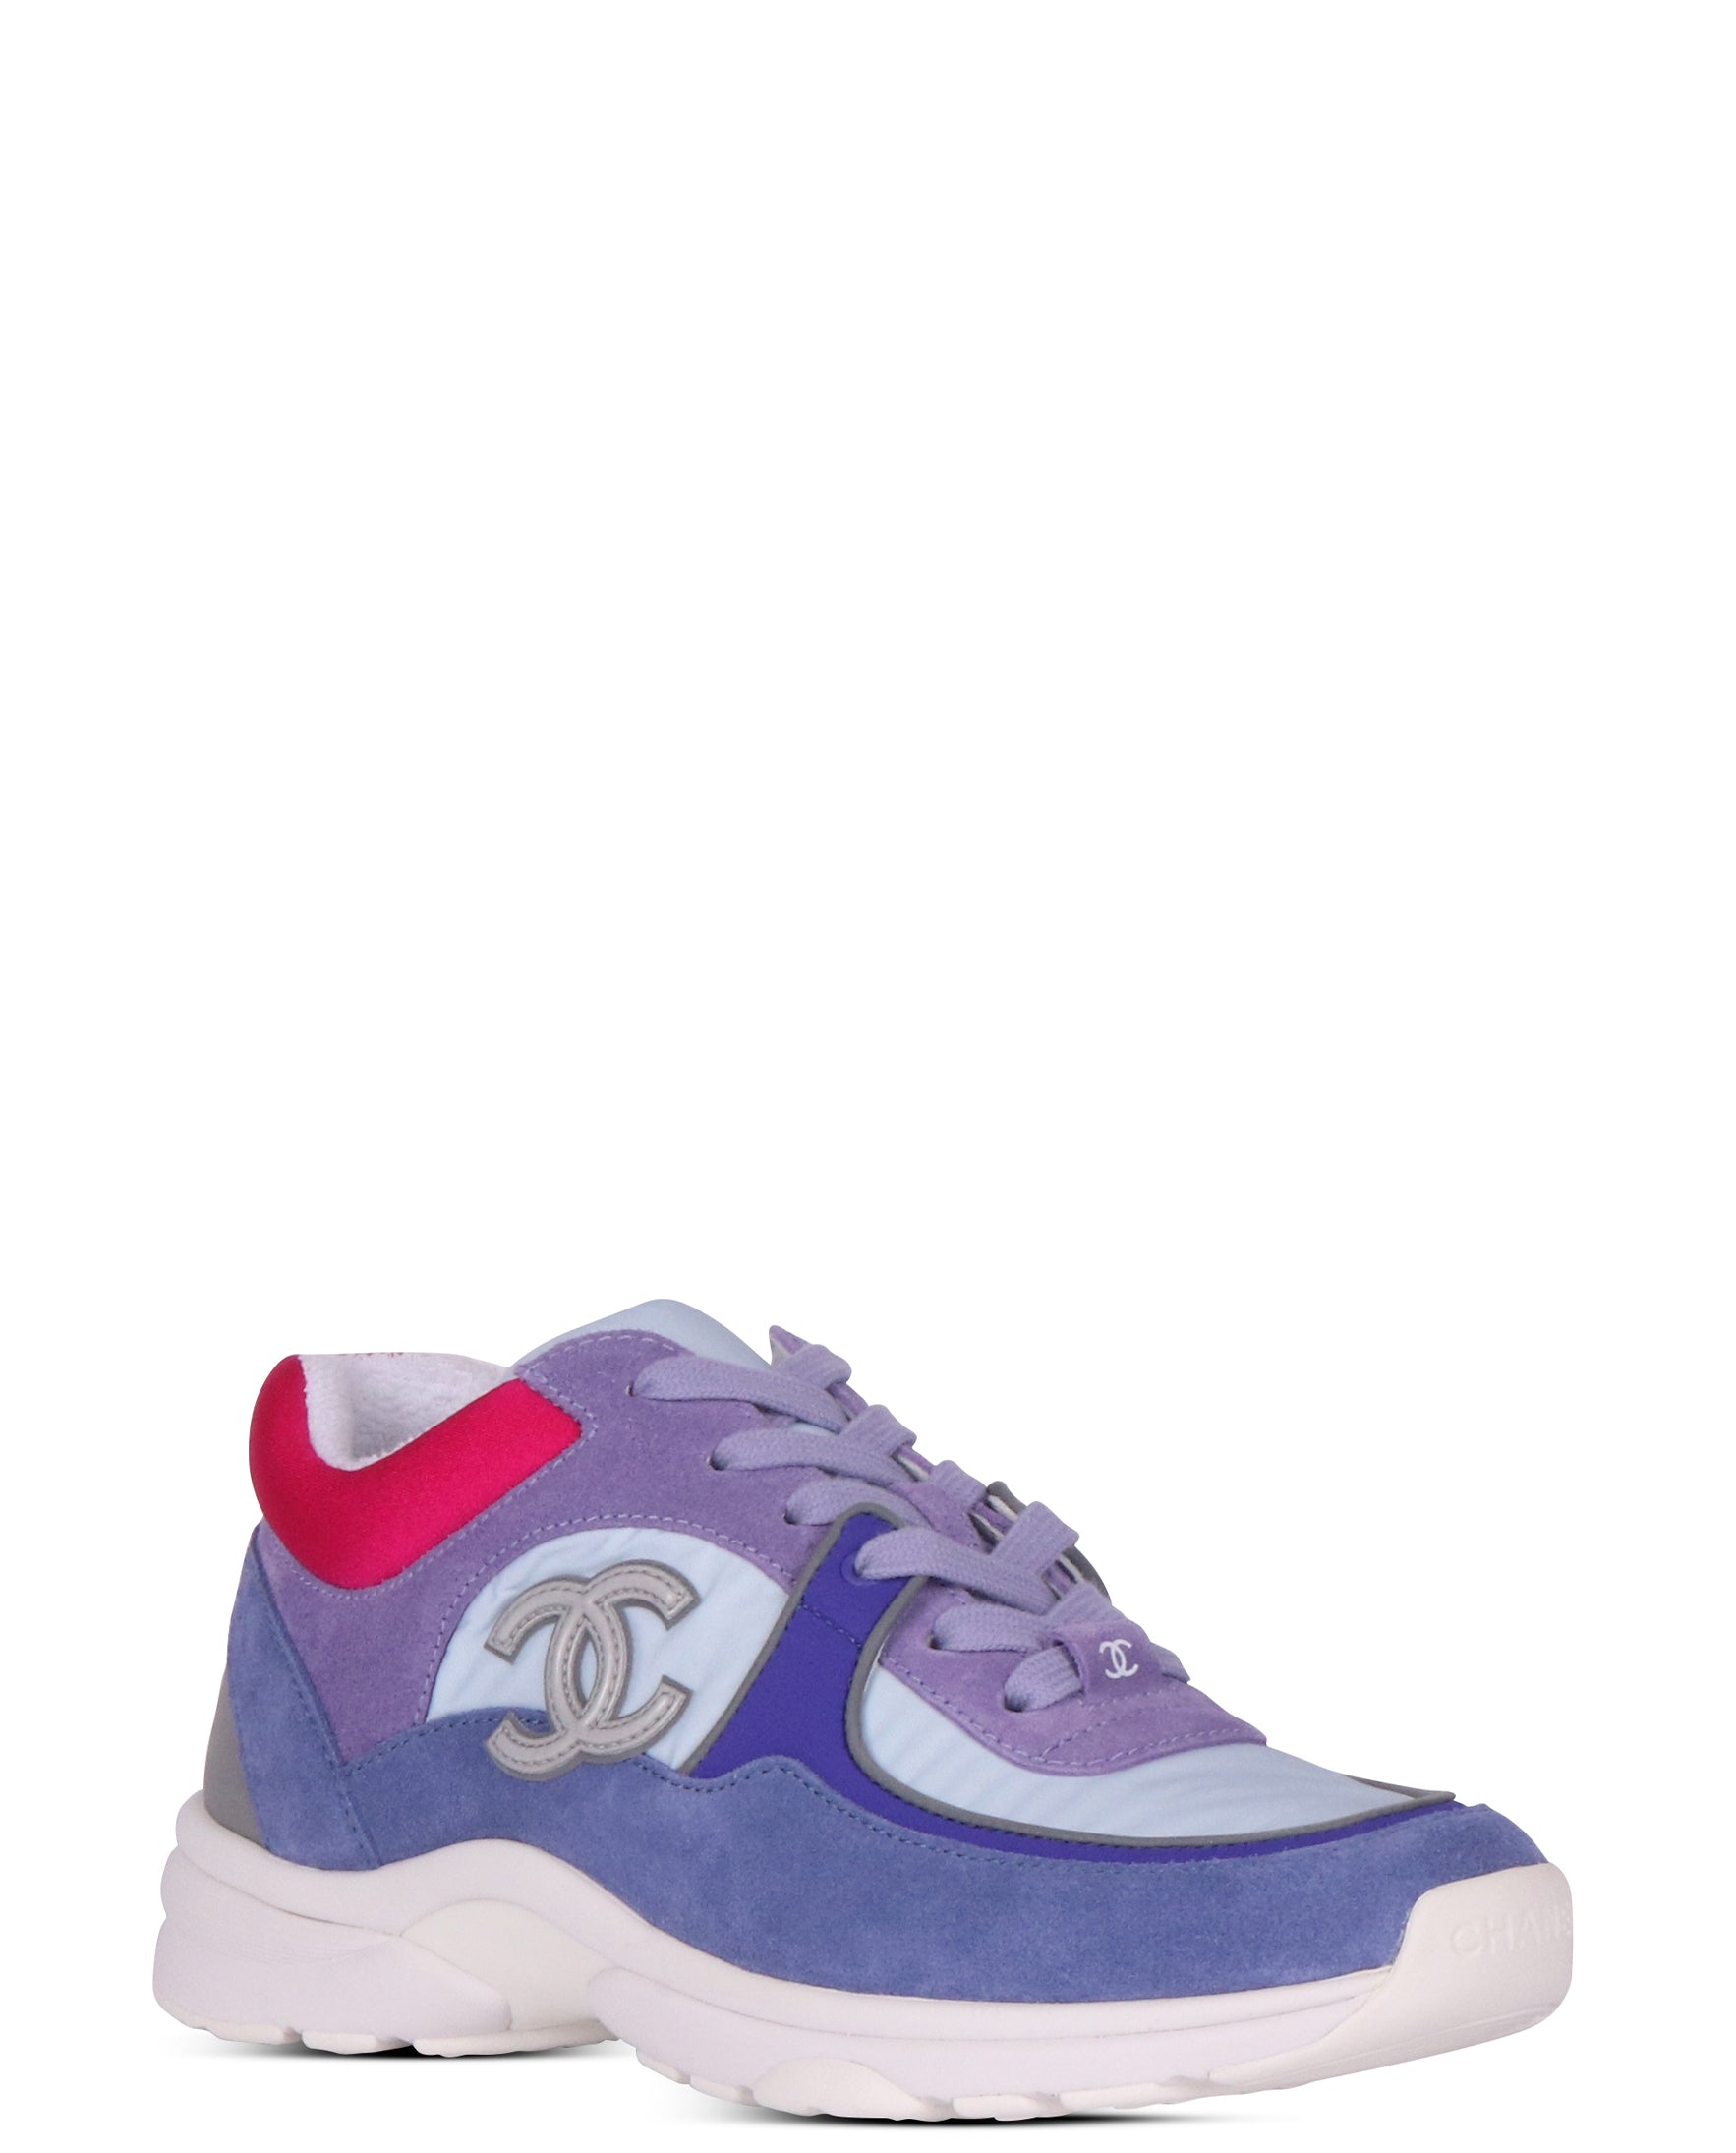 CHANEL Nylon Lambskin Suede Calfskin CC Sneakers 37 Green Purple Pink |  FASHIONPHILE